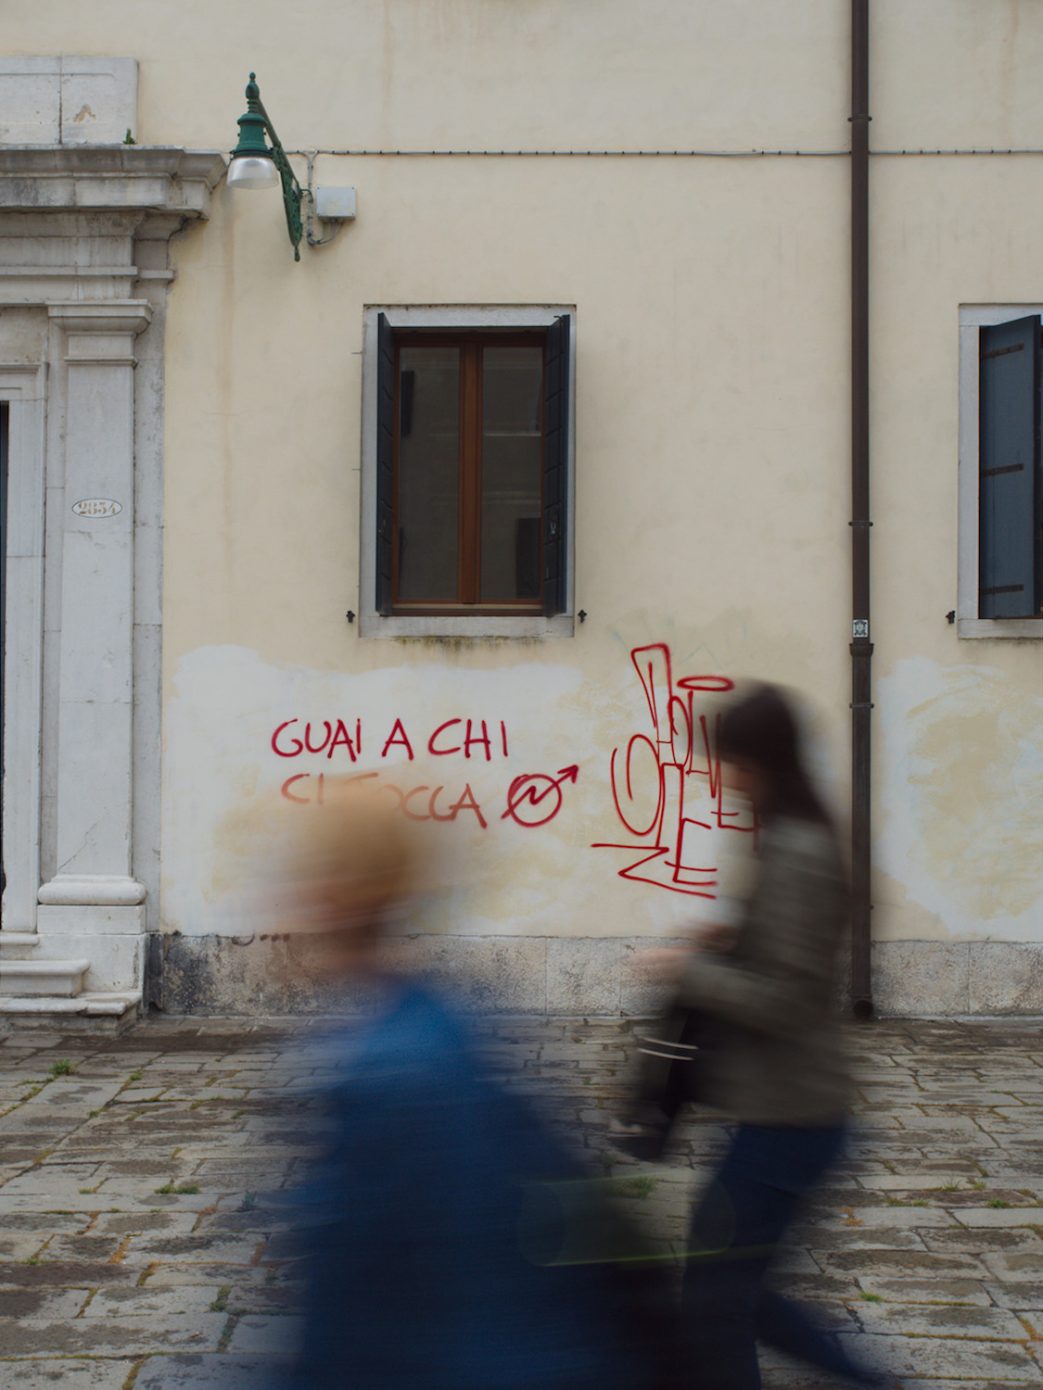 GUAI A CHI. Tagged with Graffiti, Subject, Things, Urban, graffiti, motion blur